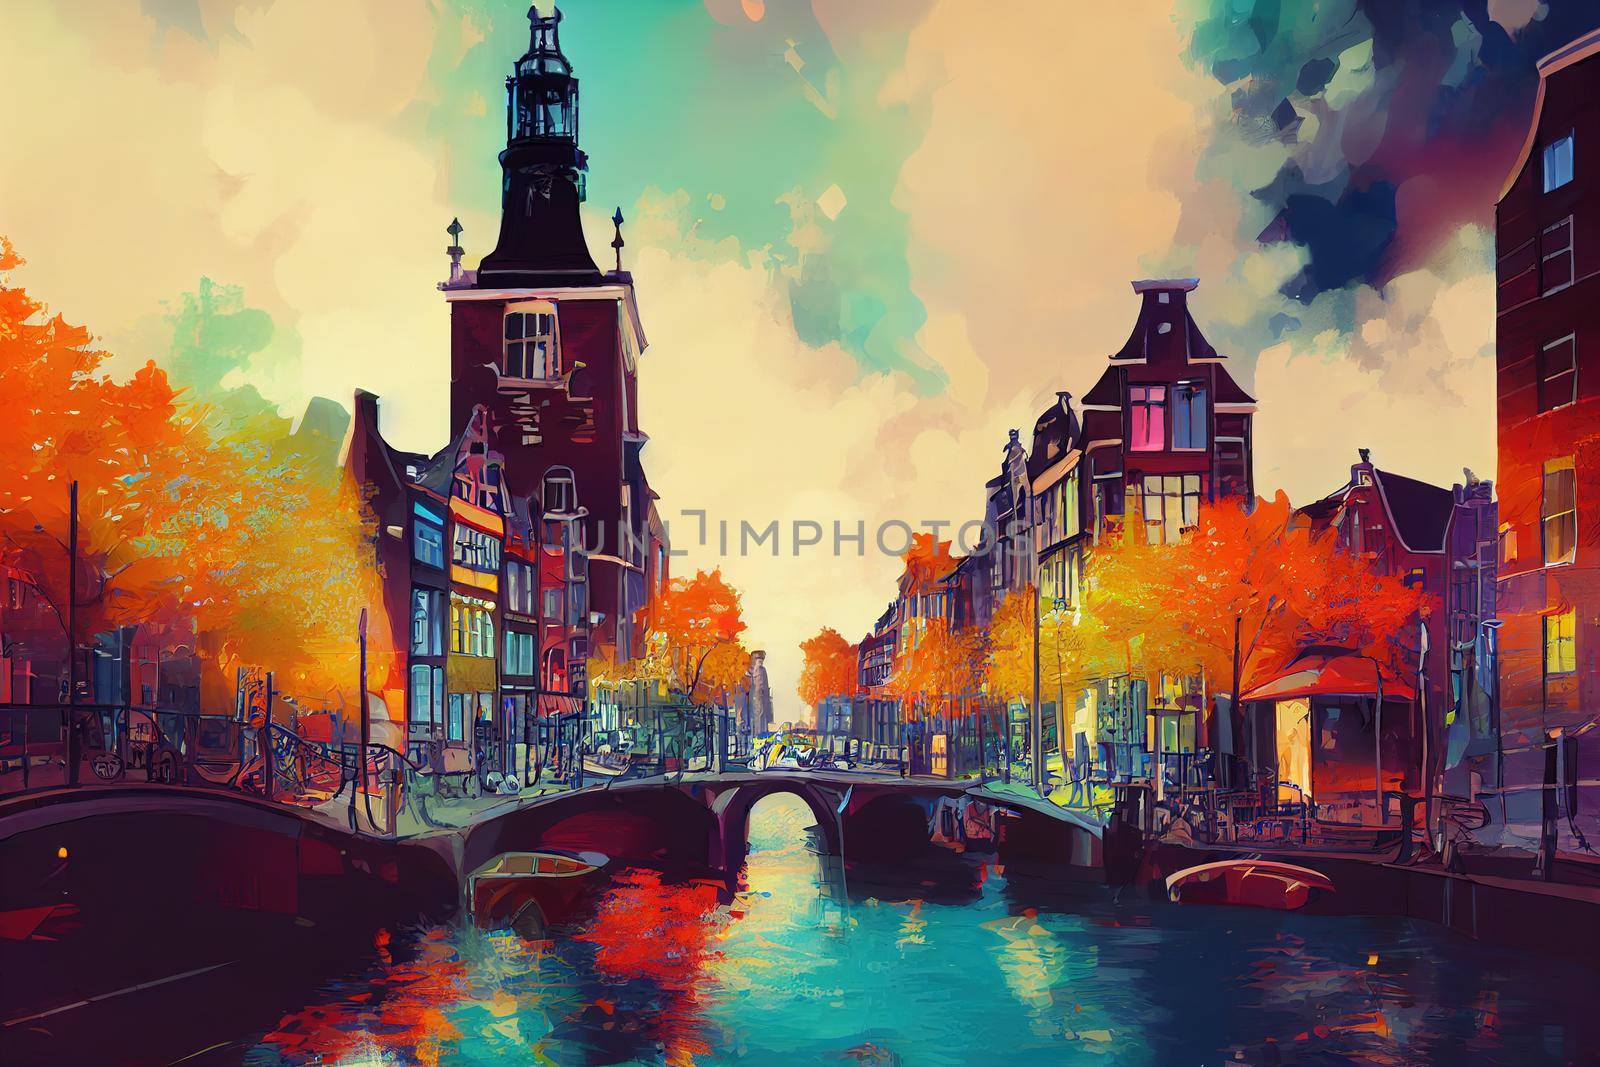 Amsterdam. High quality 2d illustration